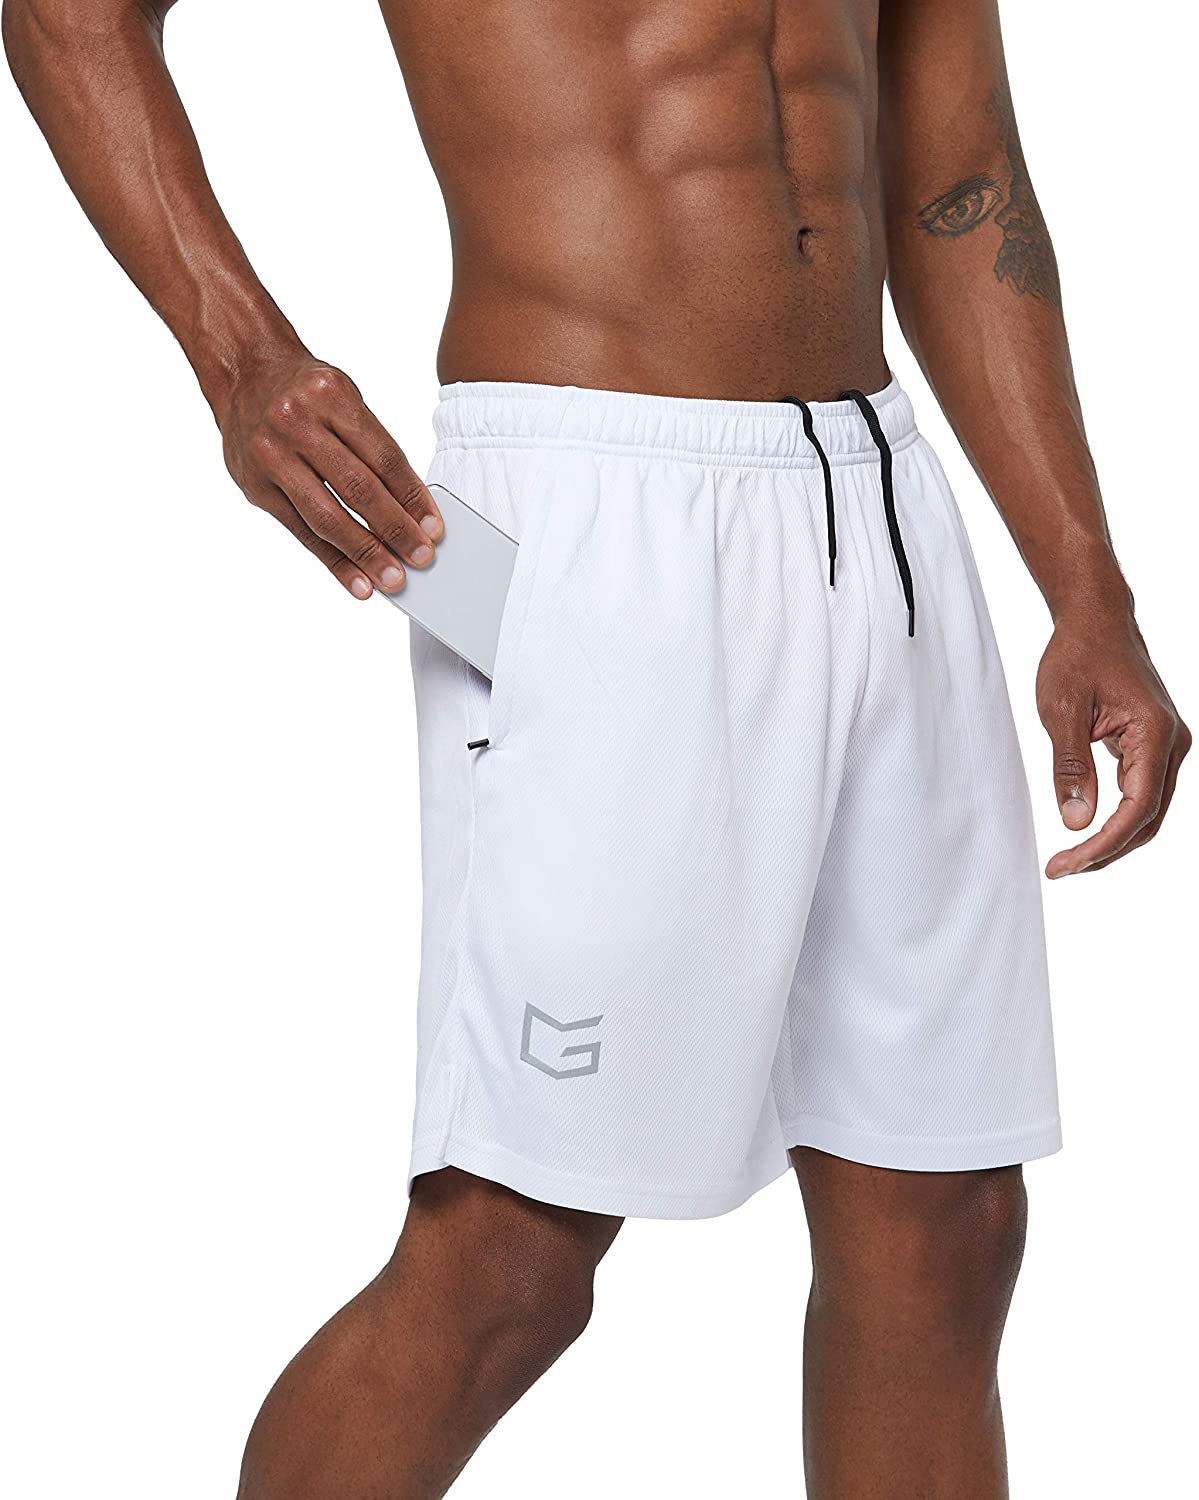 G Gradual Men's Quick Dry Sports Shorts - Zotezo US